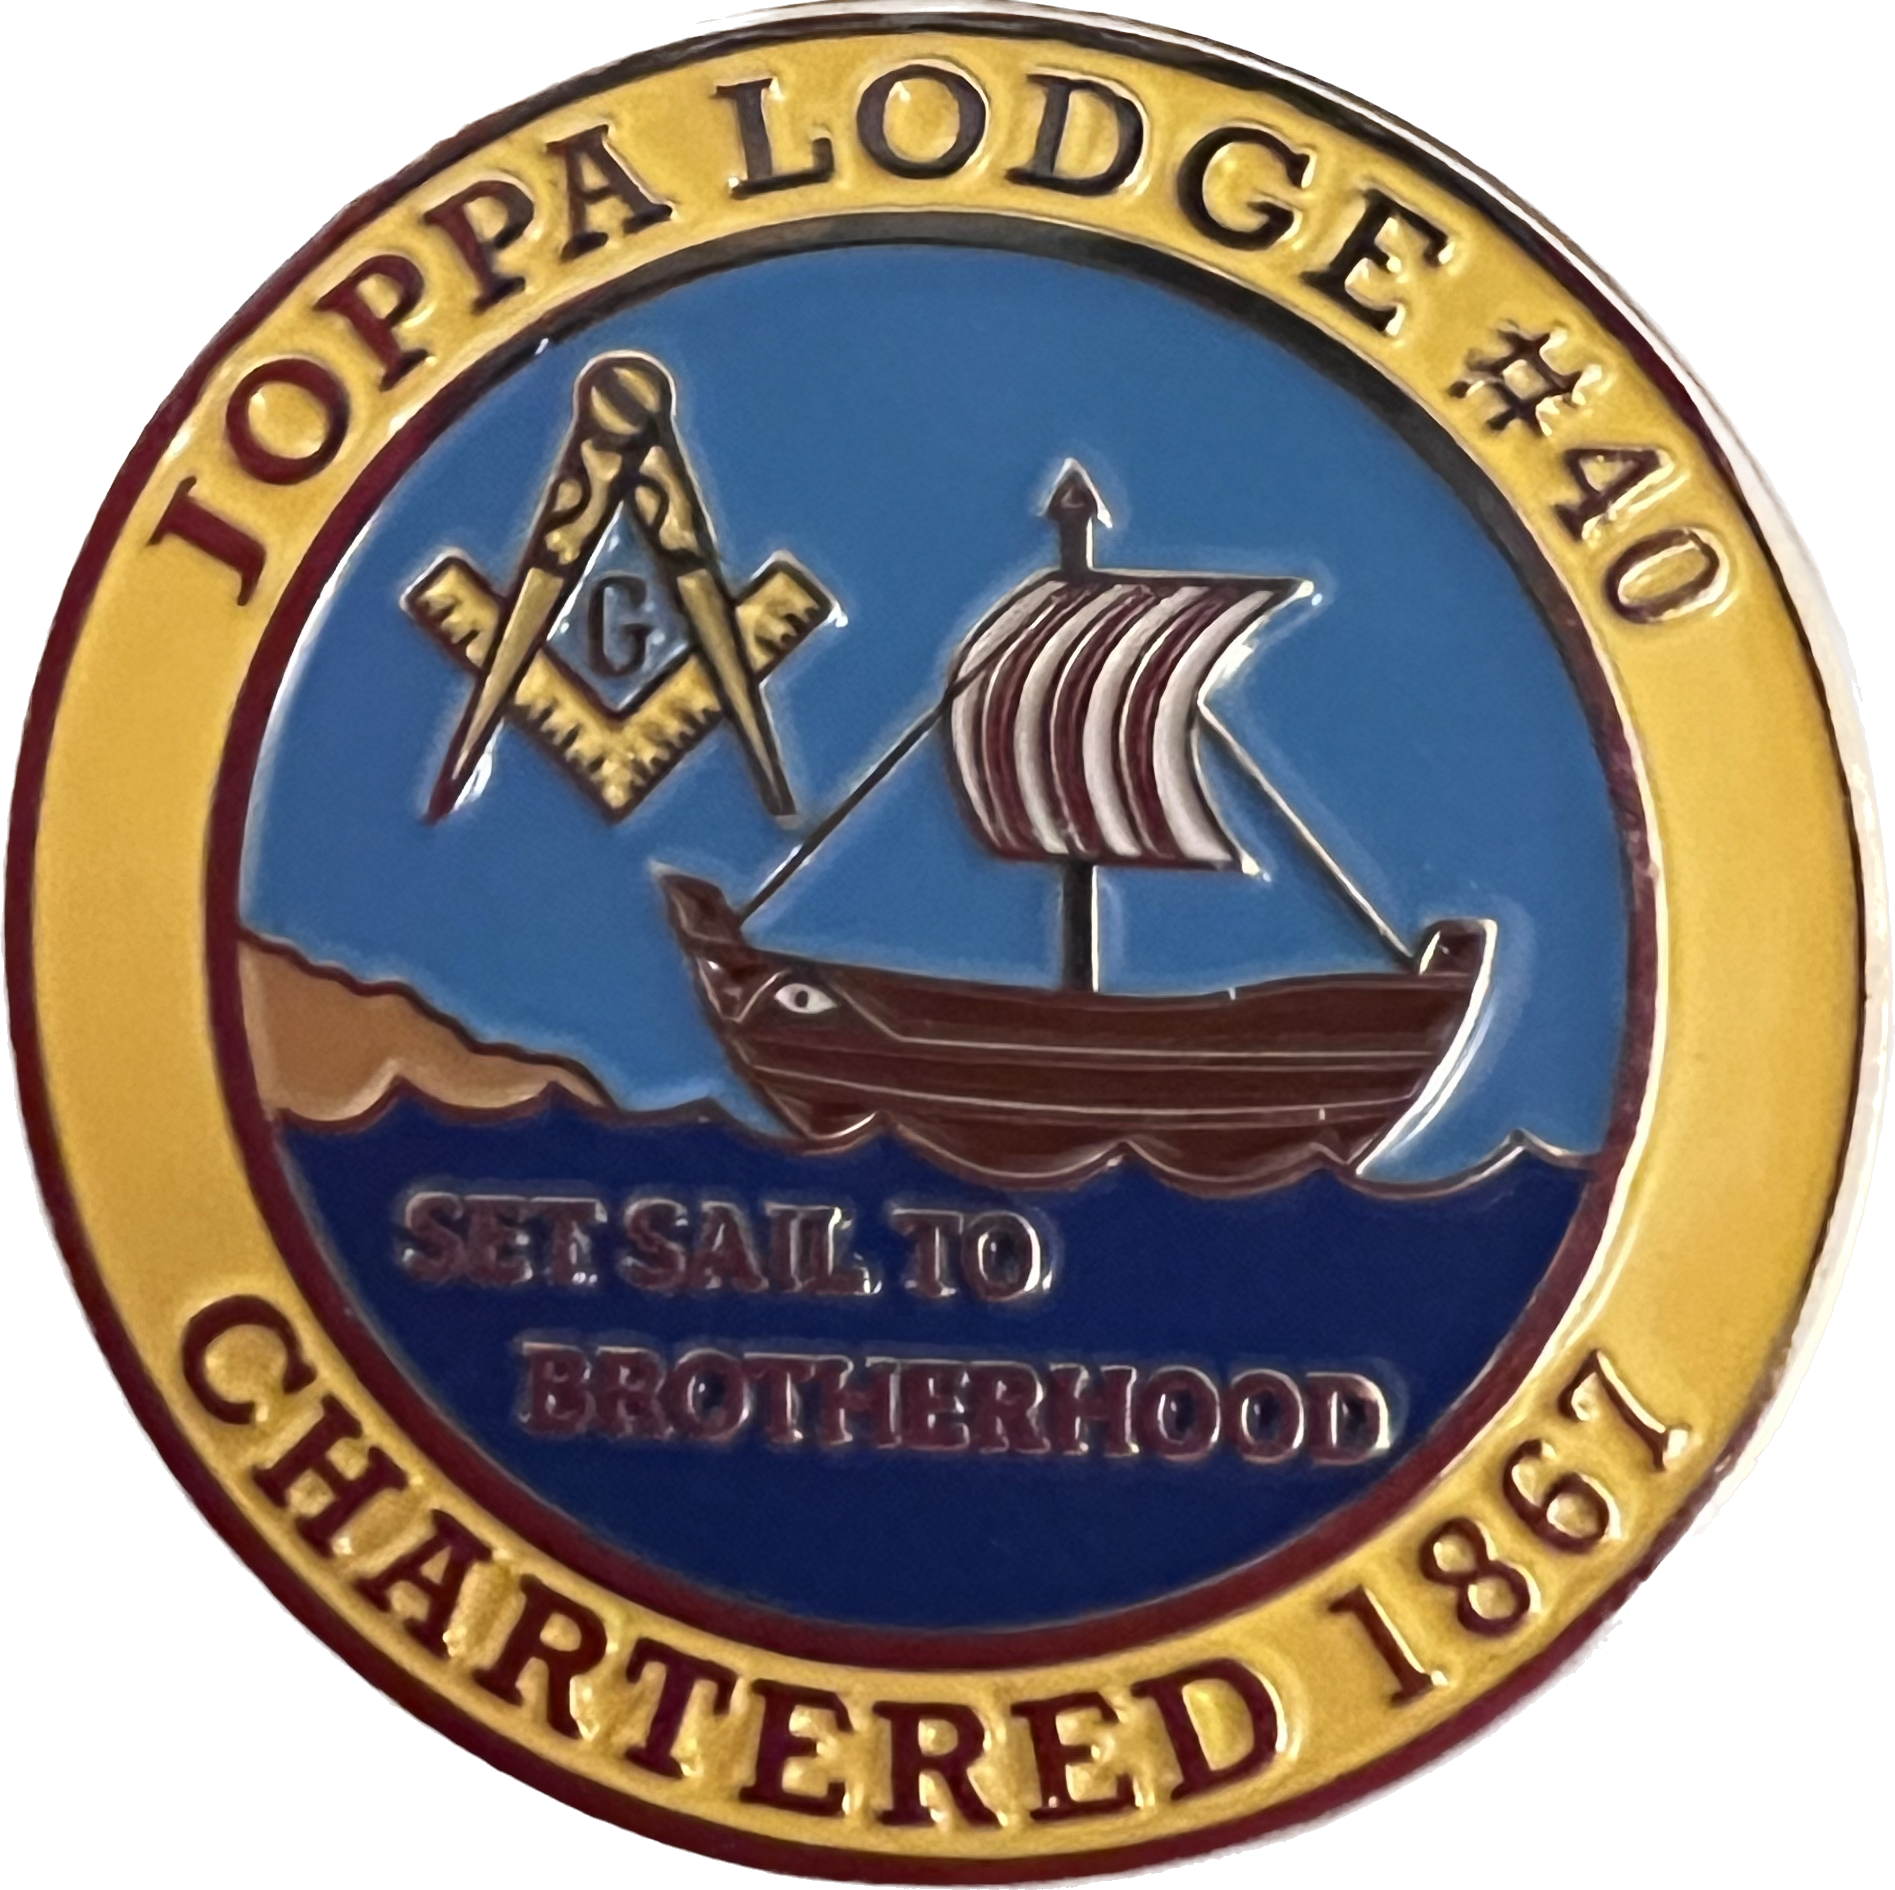 Joppa Lodge No. 40, AF & AM